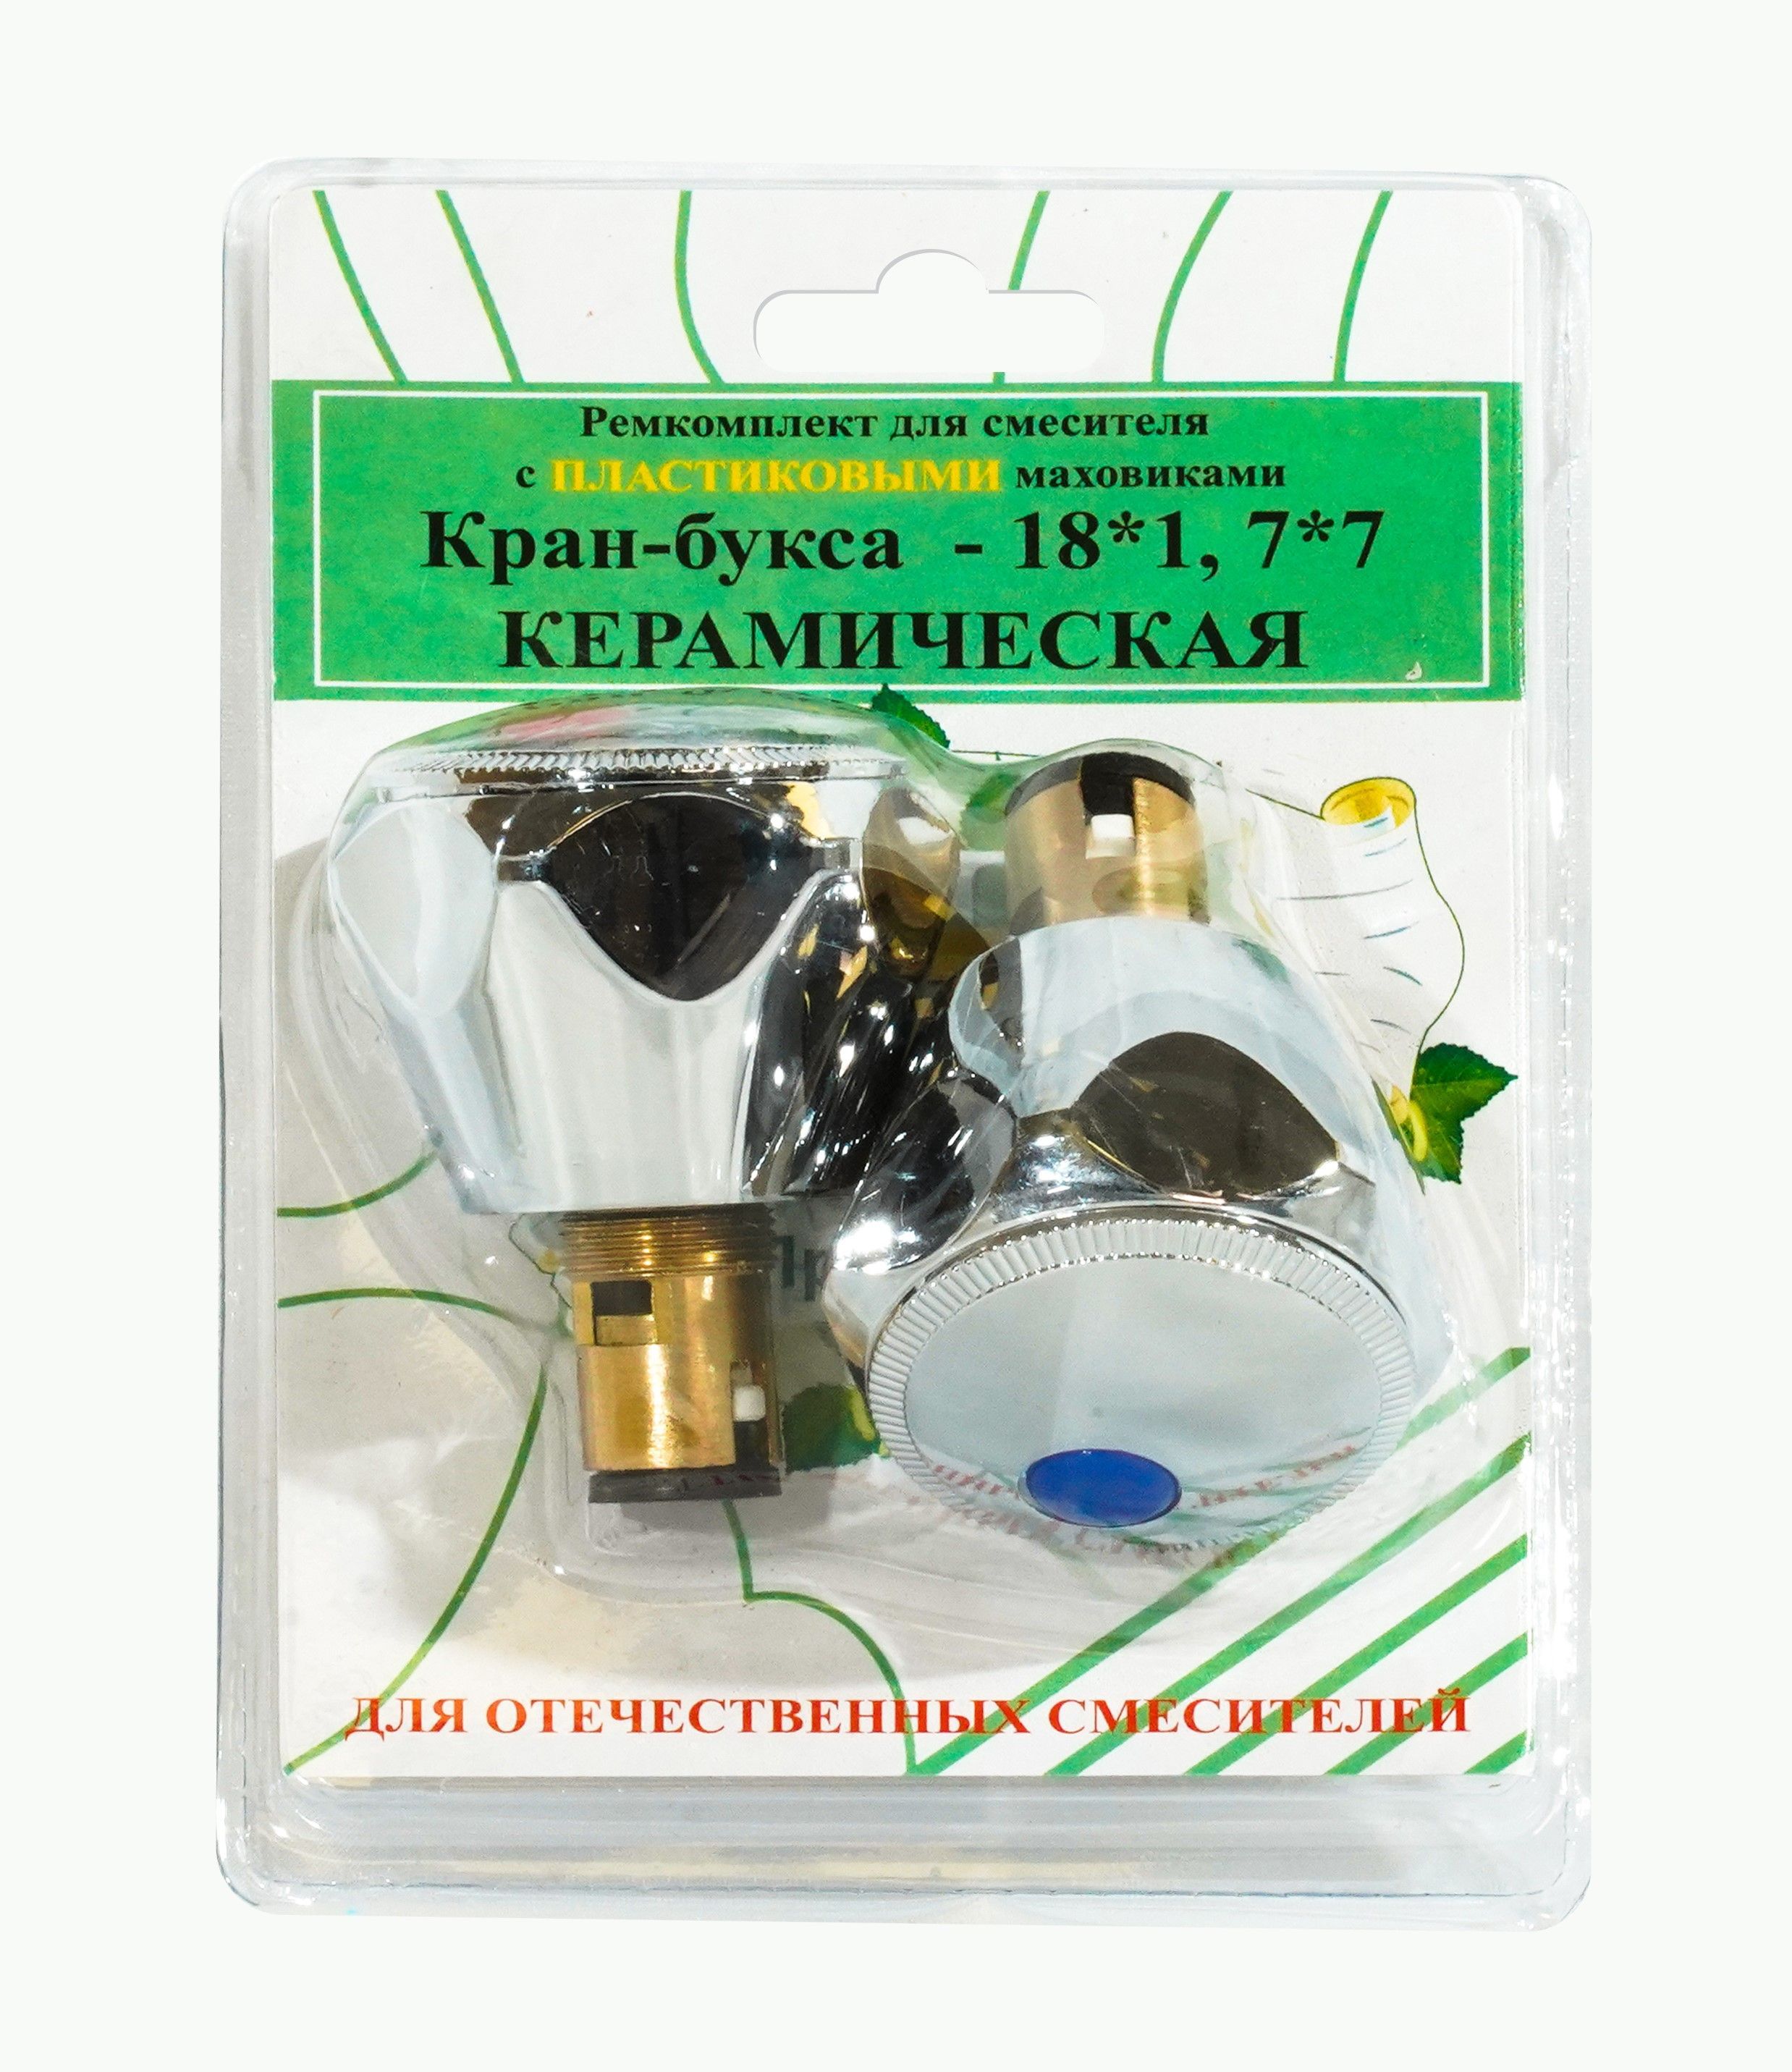 Комплект кран-буксы ПСМ M18х1 7х7 с маховиками (Мария) пластик ПСМ RK-RPM